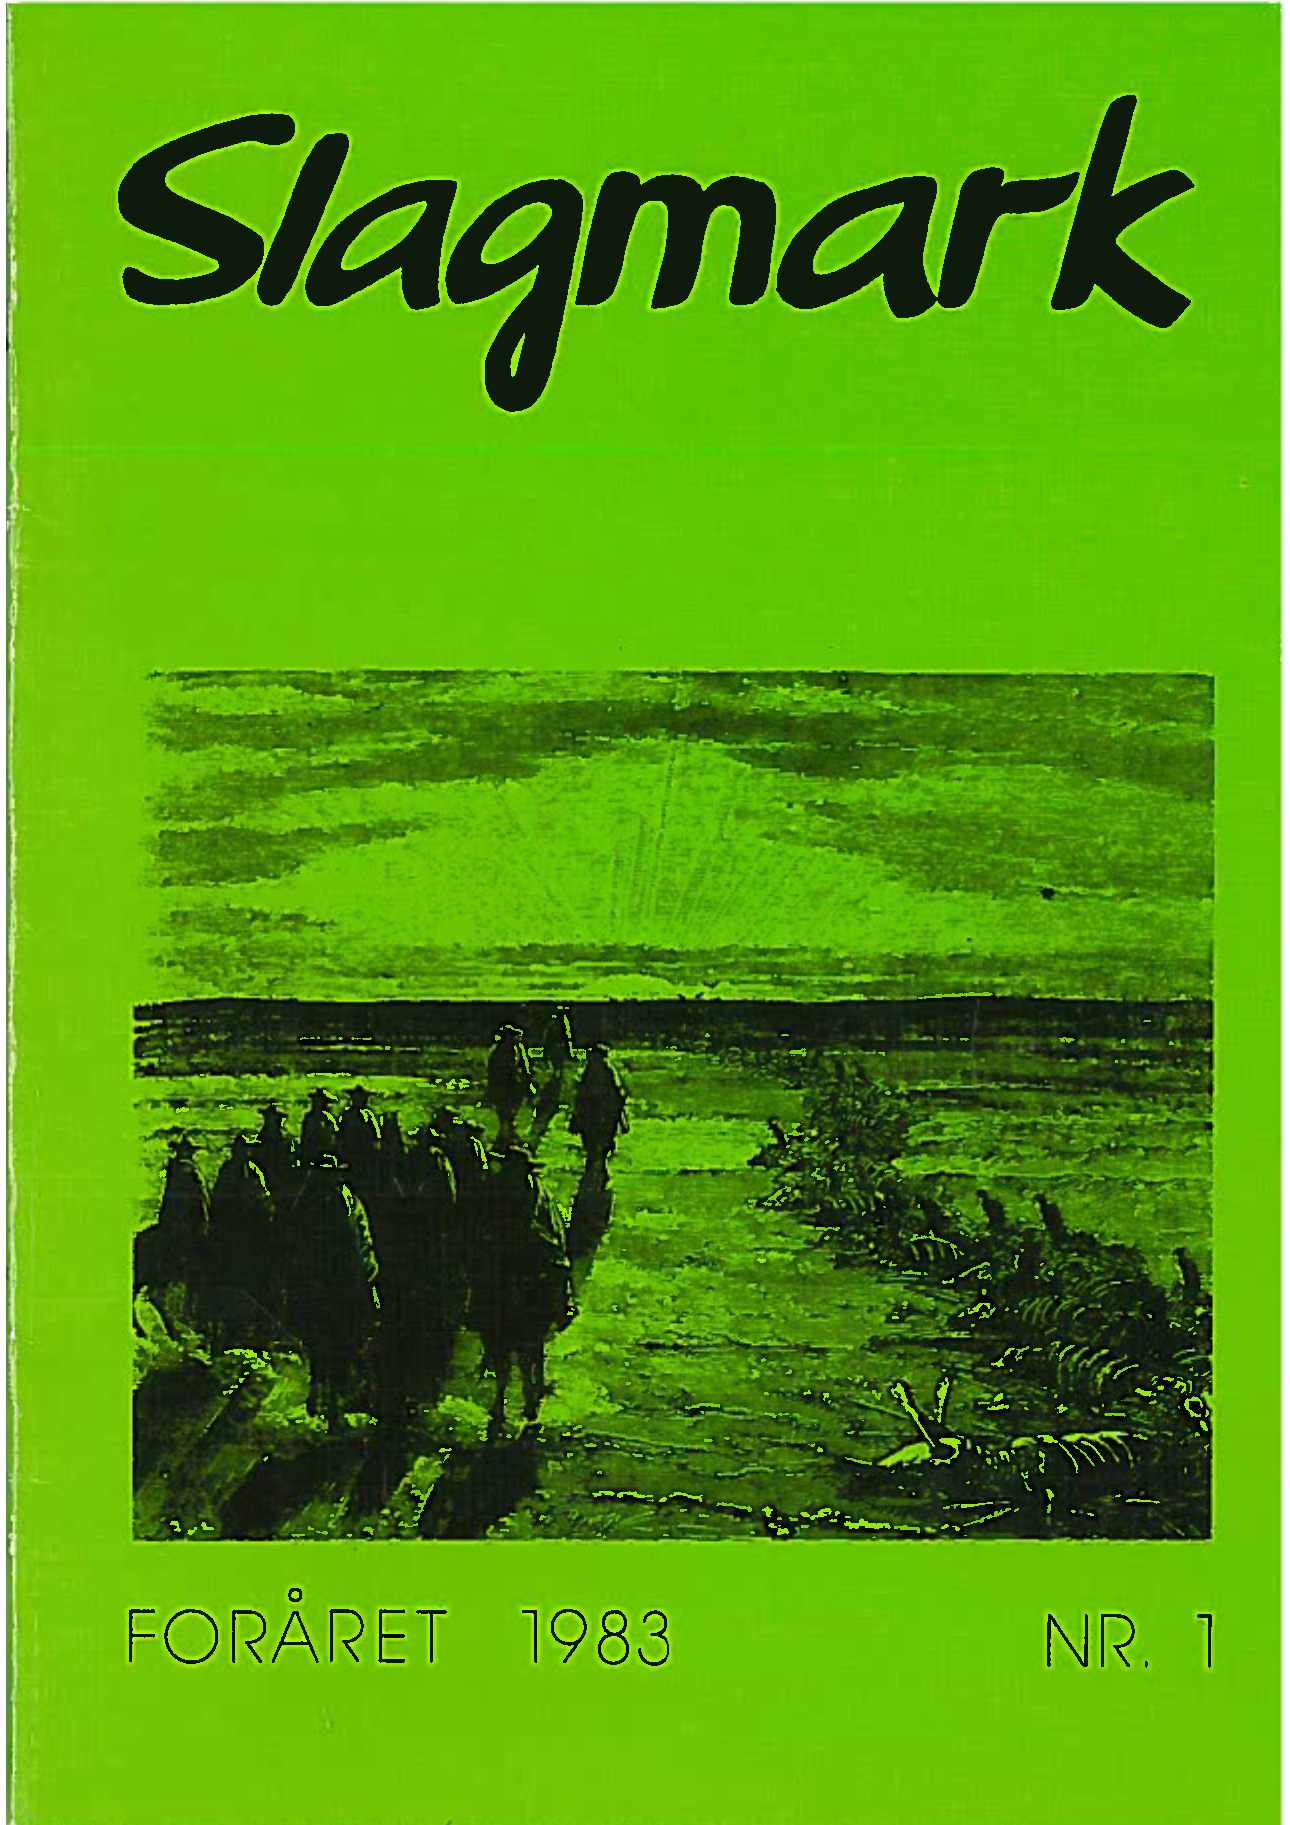 					View No. 1 (1983): Slagmark
				